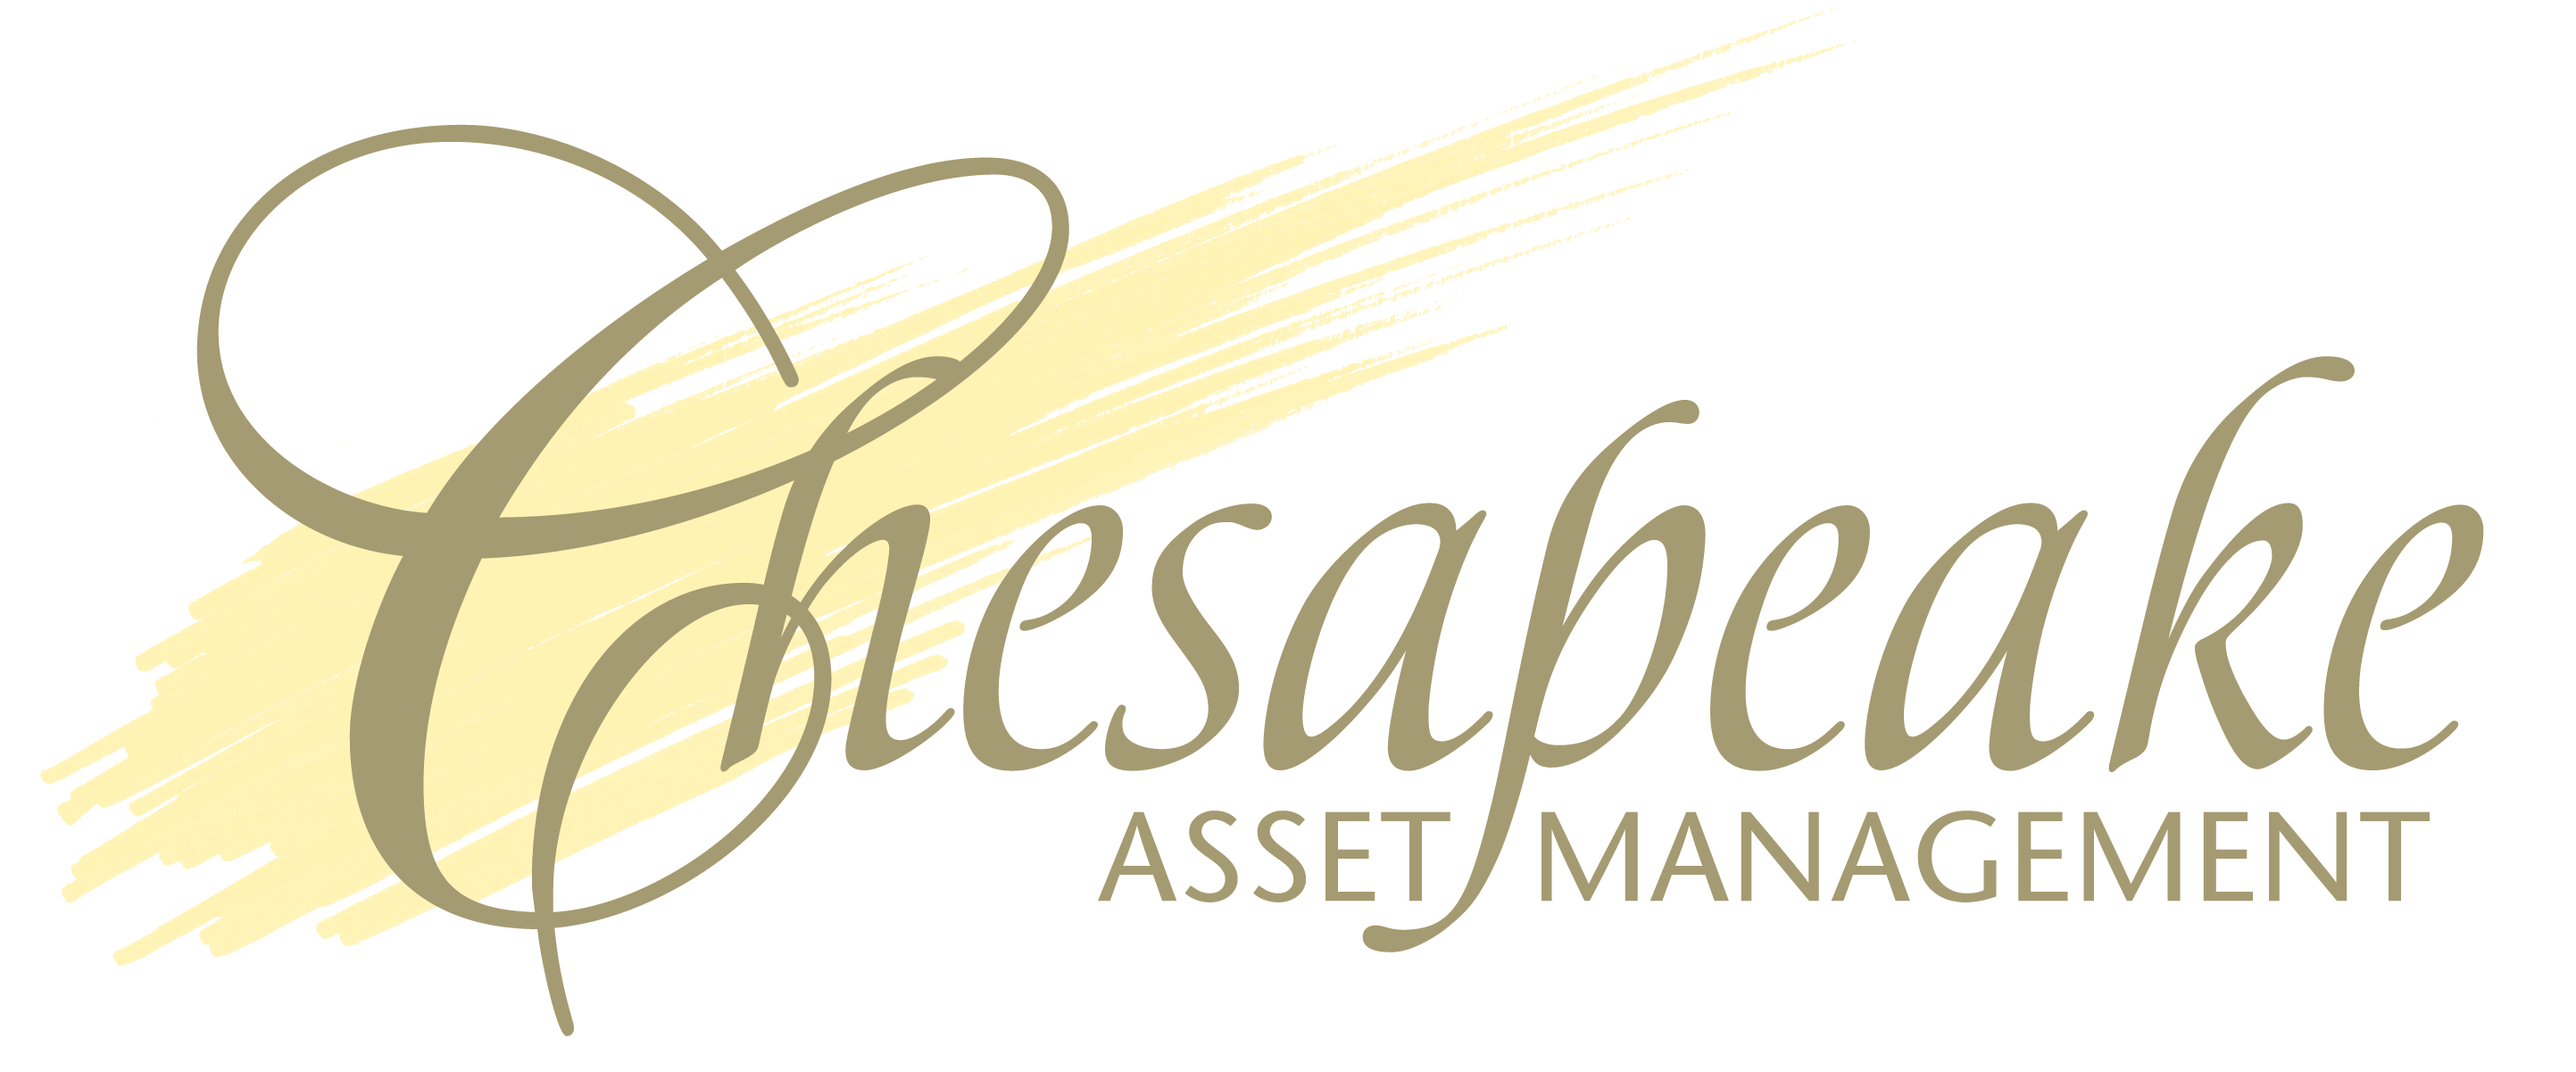 Chesapeake Asset Management Co LOGO